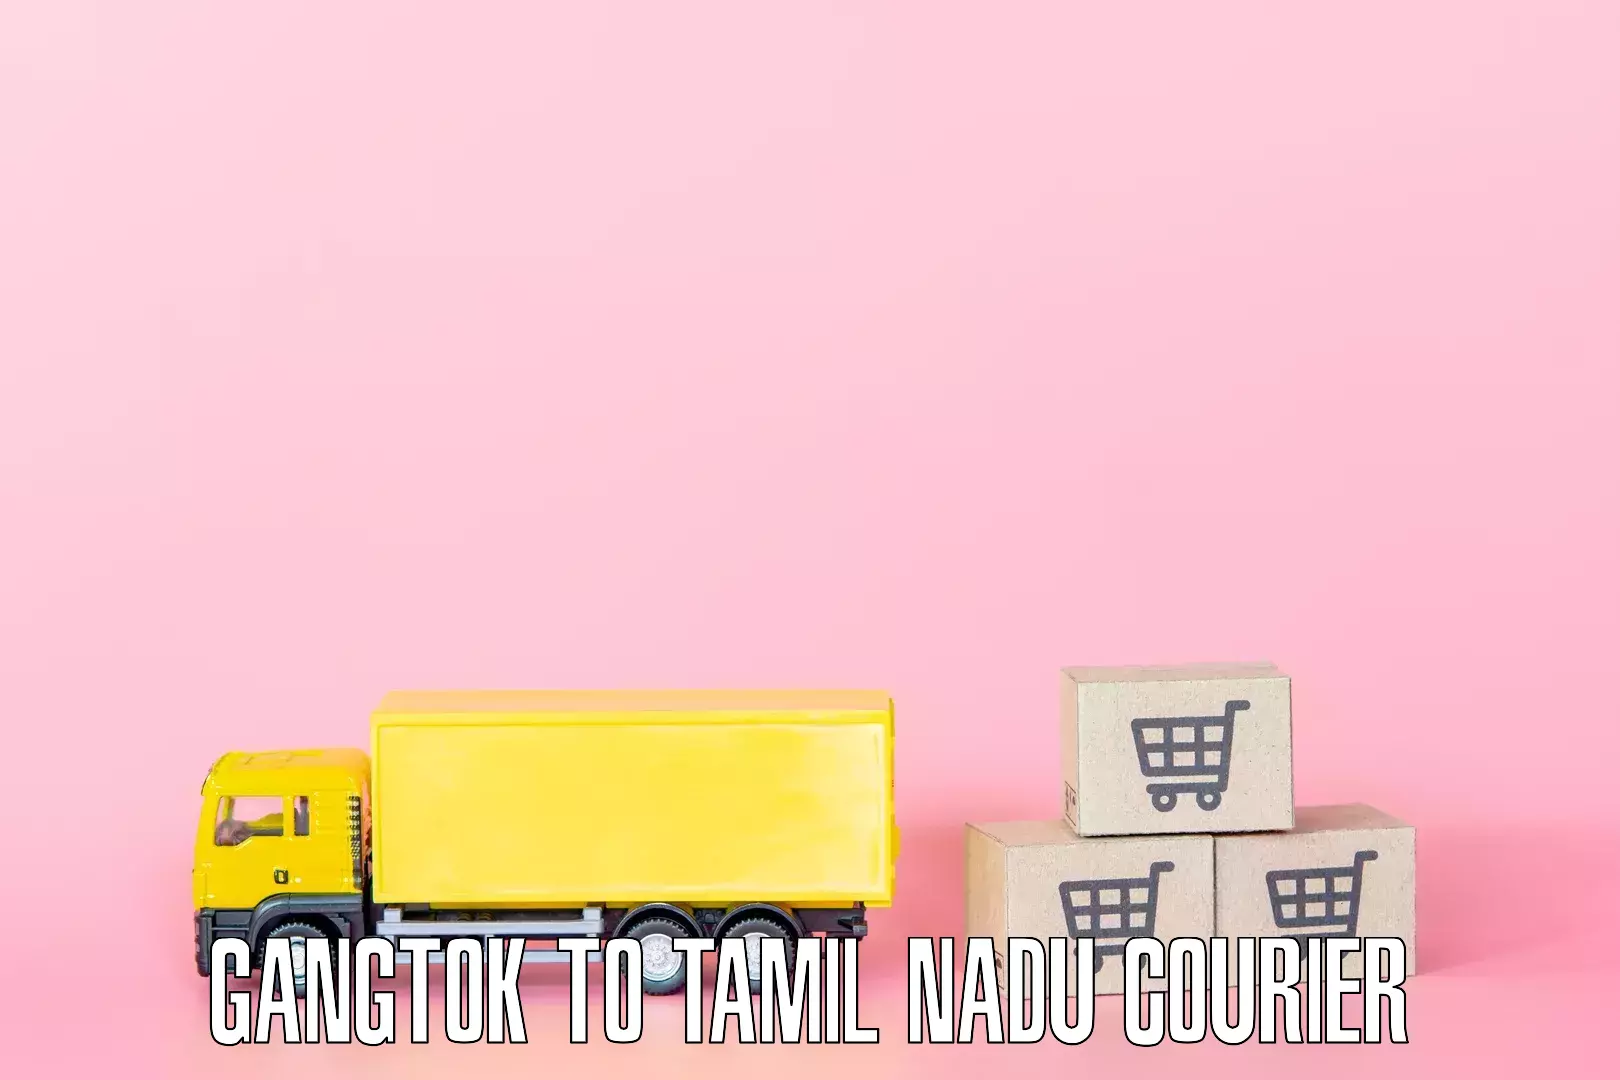 Furniture transport company Gangtok to Tamil Nadu